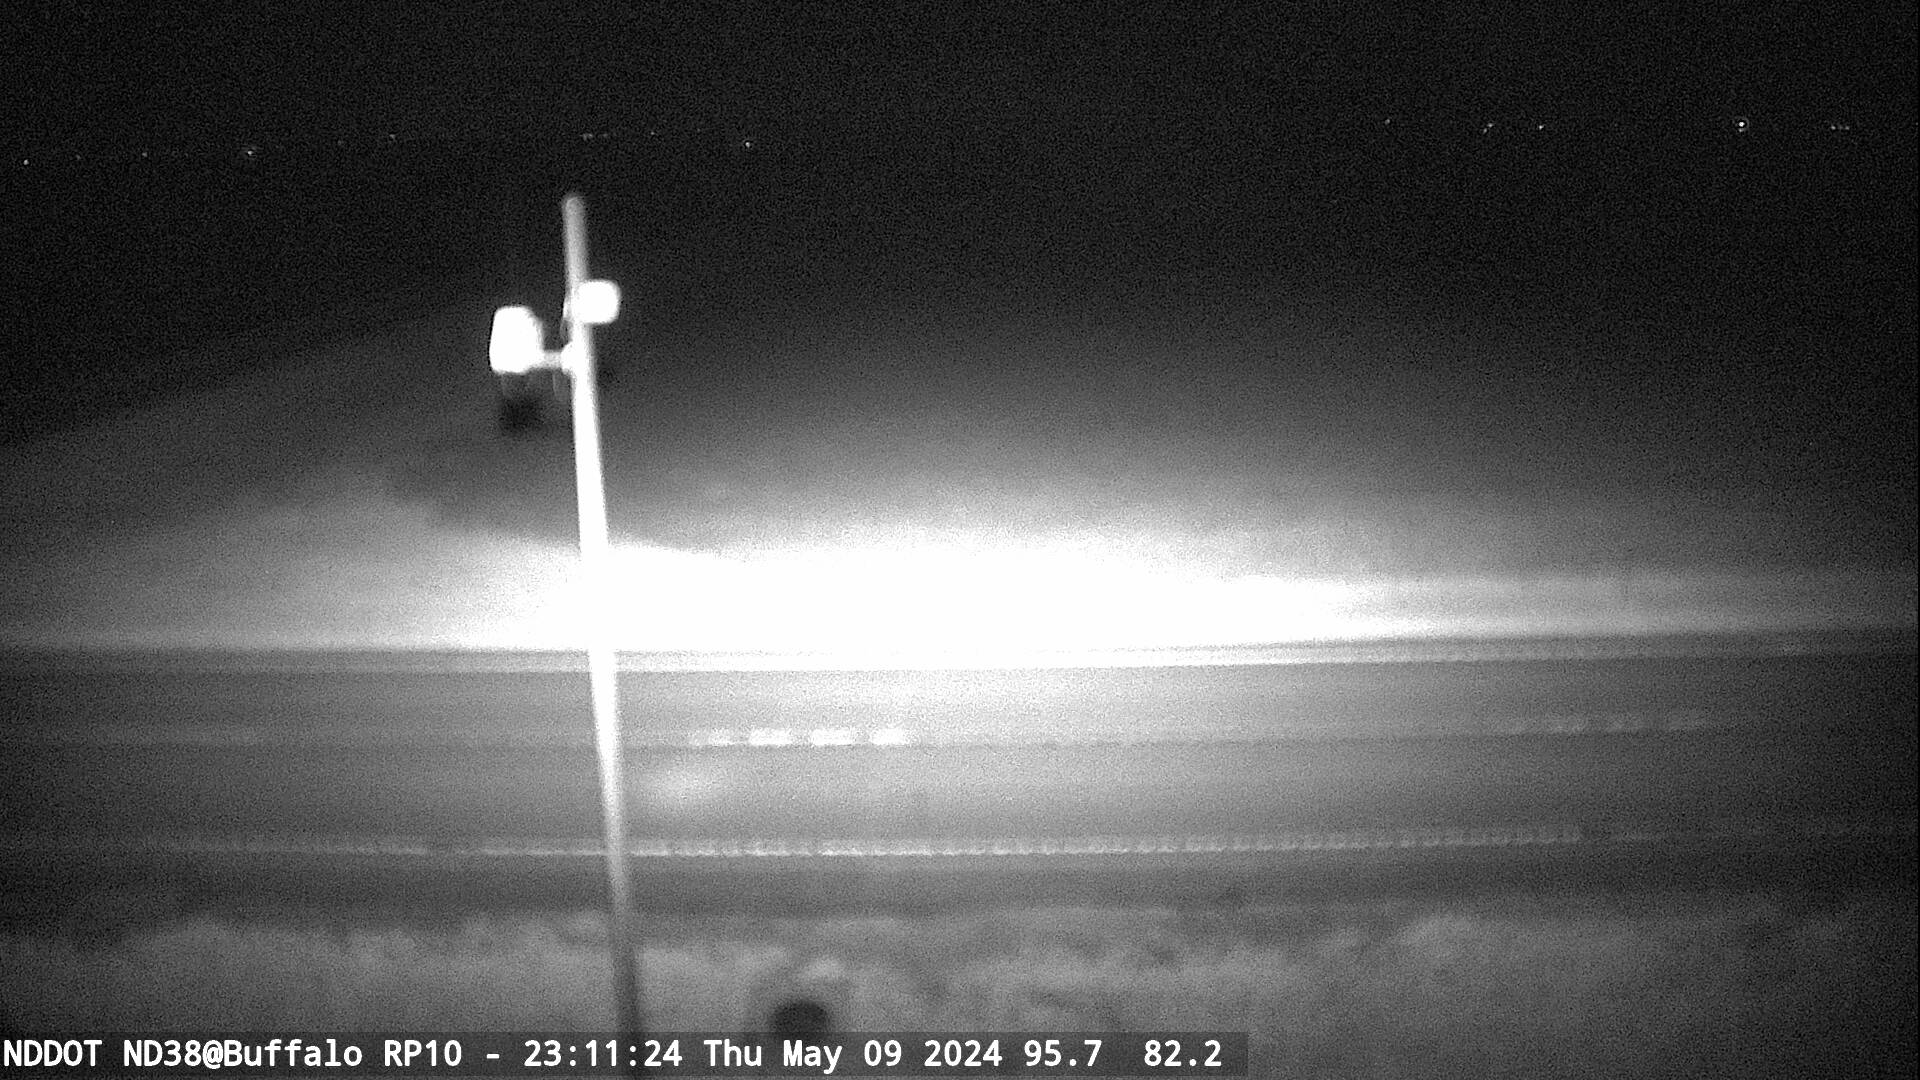 ND 38 N (MP: 10.000) Buffalo - West Traffic Camera